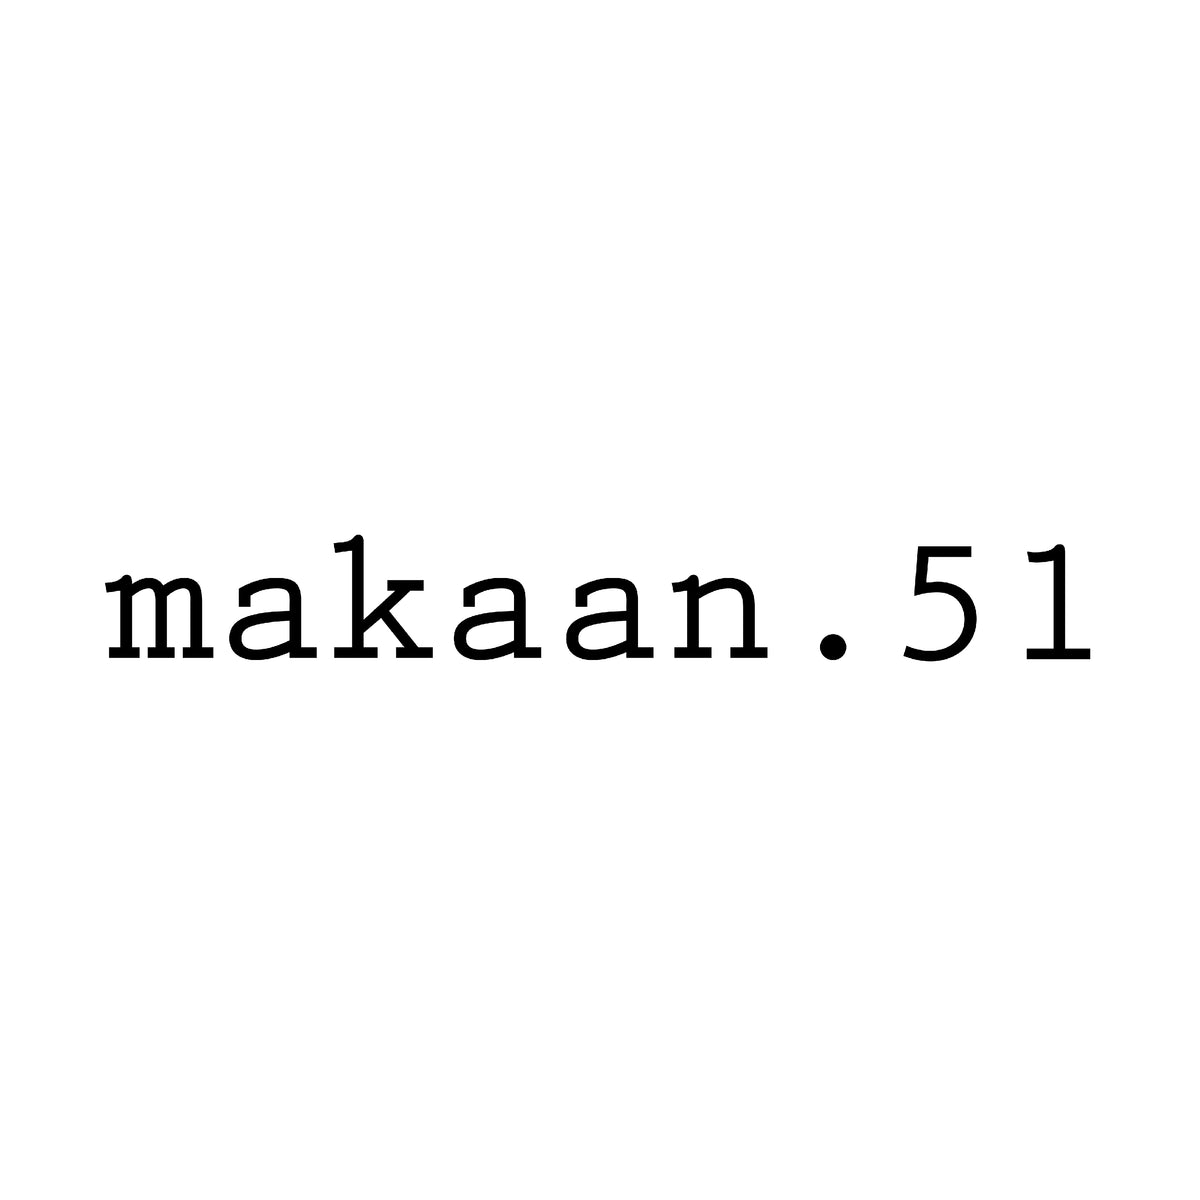 www.makaan51.com